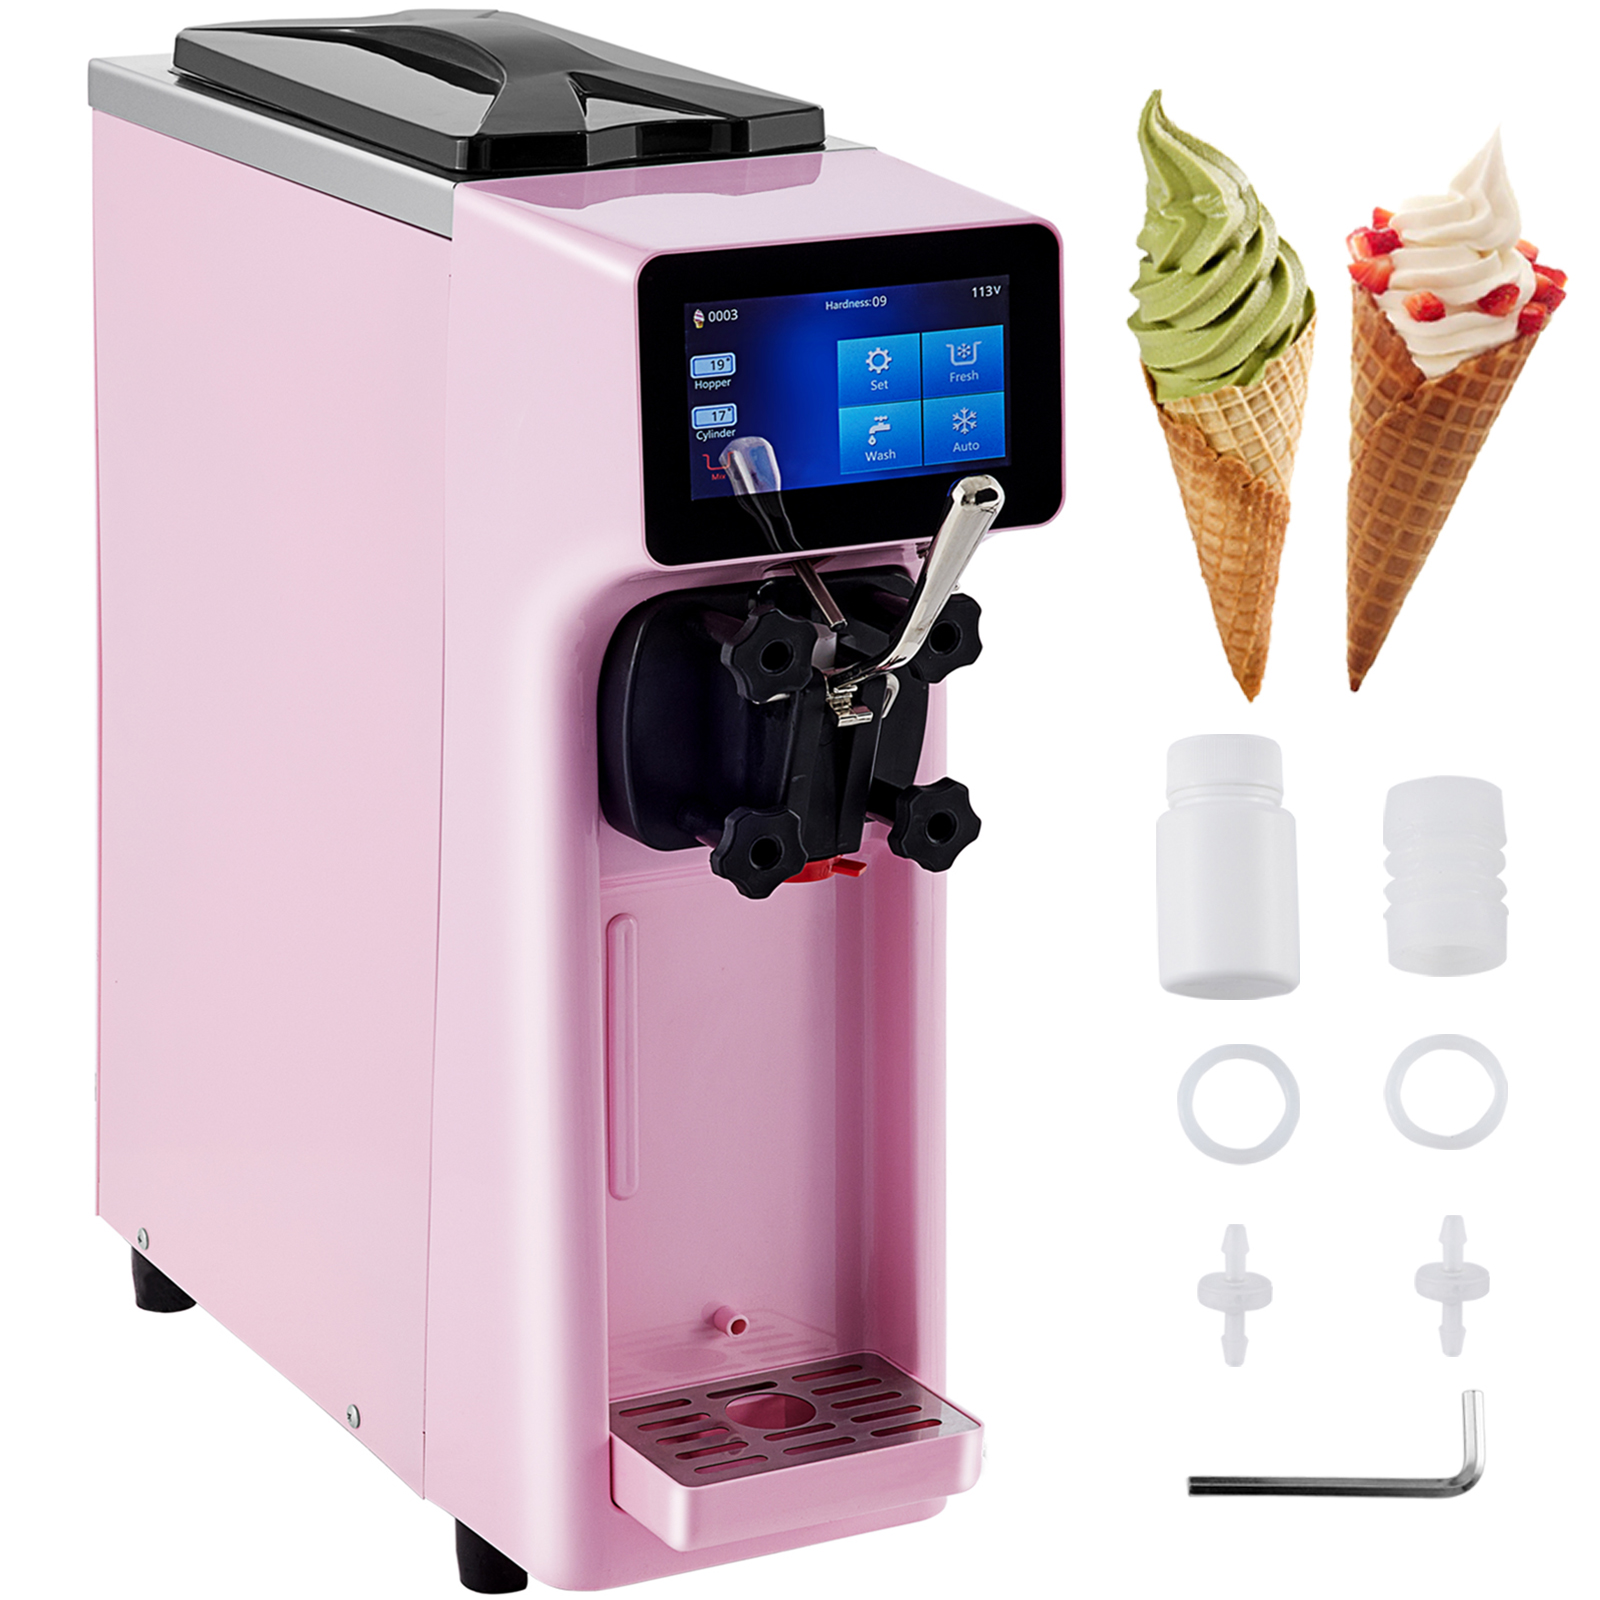 VEVOR Soft Ice Cream Machine 2200W Commercial Vertical Soft Ice Cream Maker Machine 5.3 to 7.4 Gallons per Hour Ice Cream Machine for Restaurants Bars Cafes Bakeries 